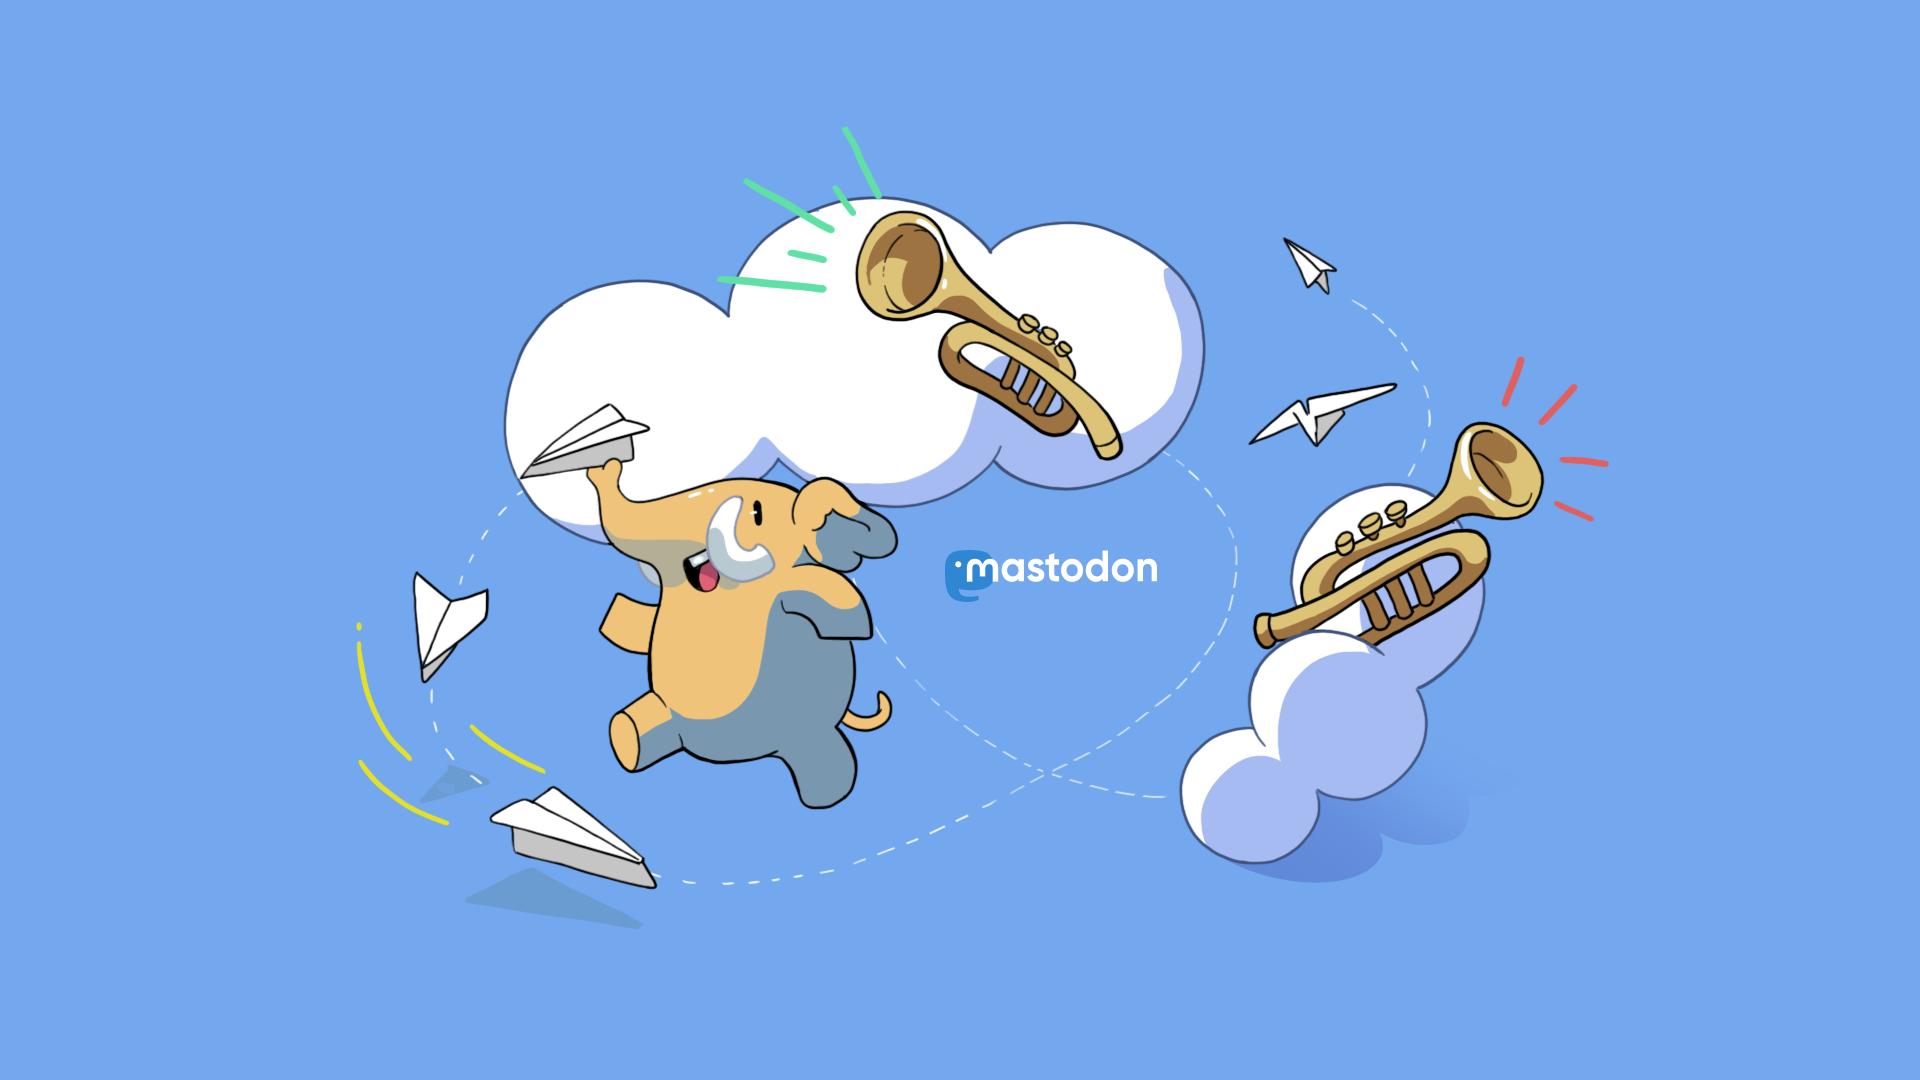 lichess: The development of the NEW app… - Mastodon